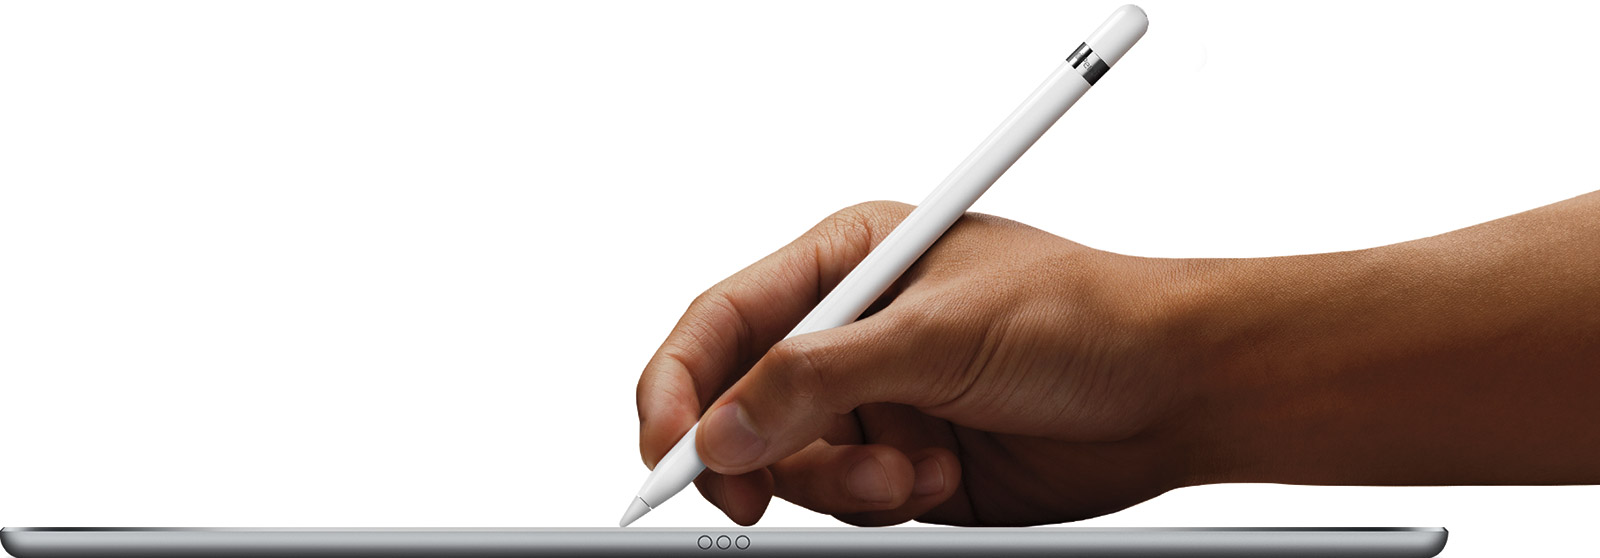 DEMO-Apple-Pencil-iPad-10-2-2020-Weiss-01.jpg